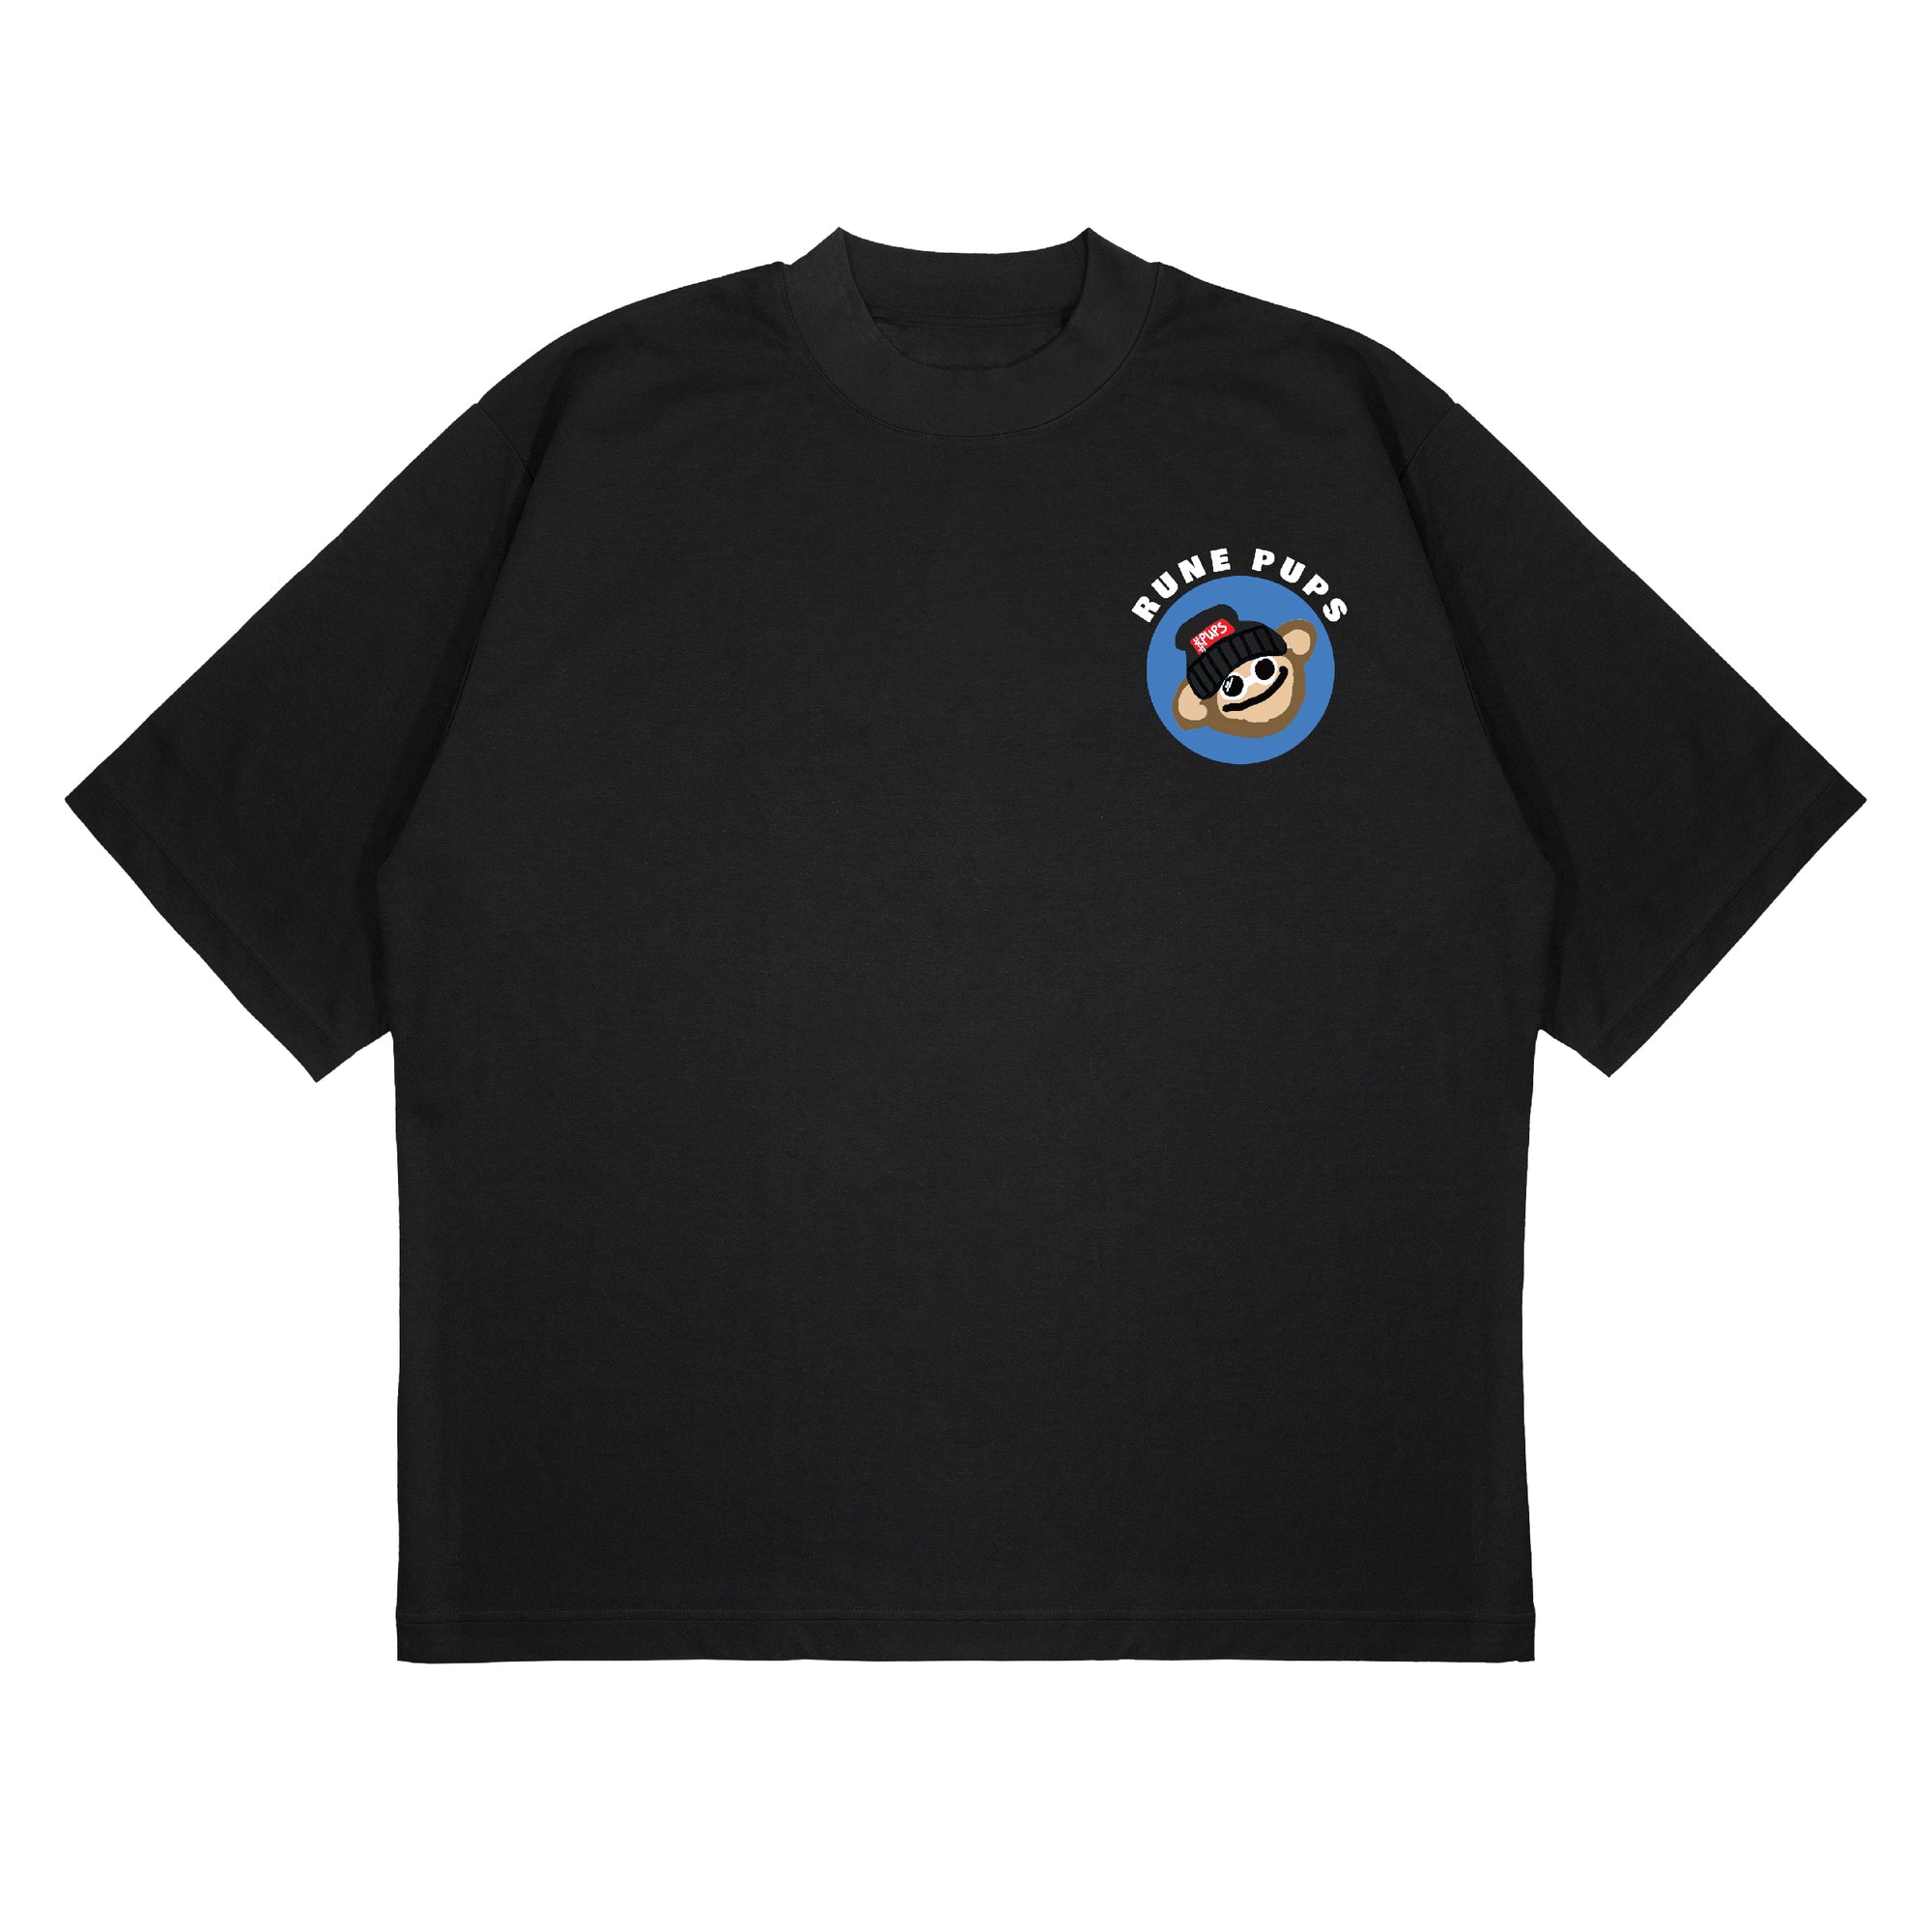 Rune Pups - 6.5oz Tee Shirt